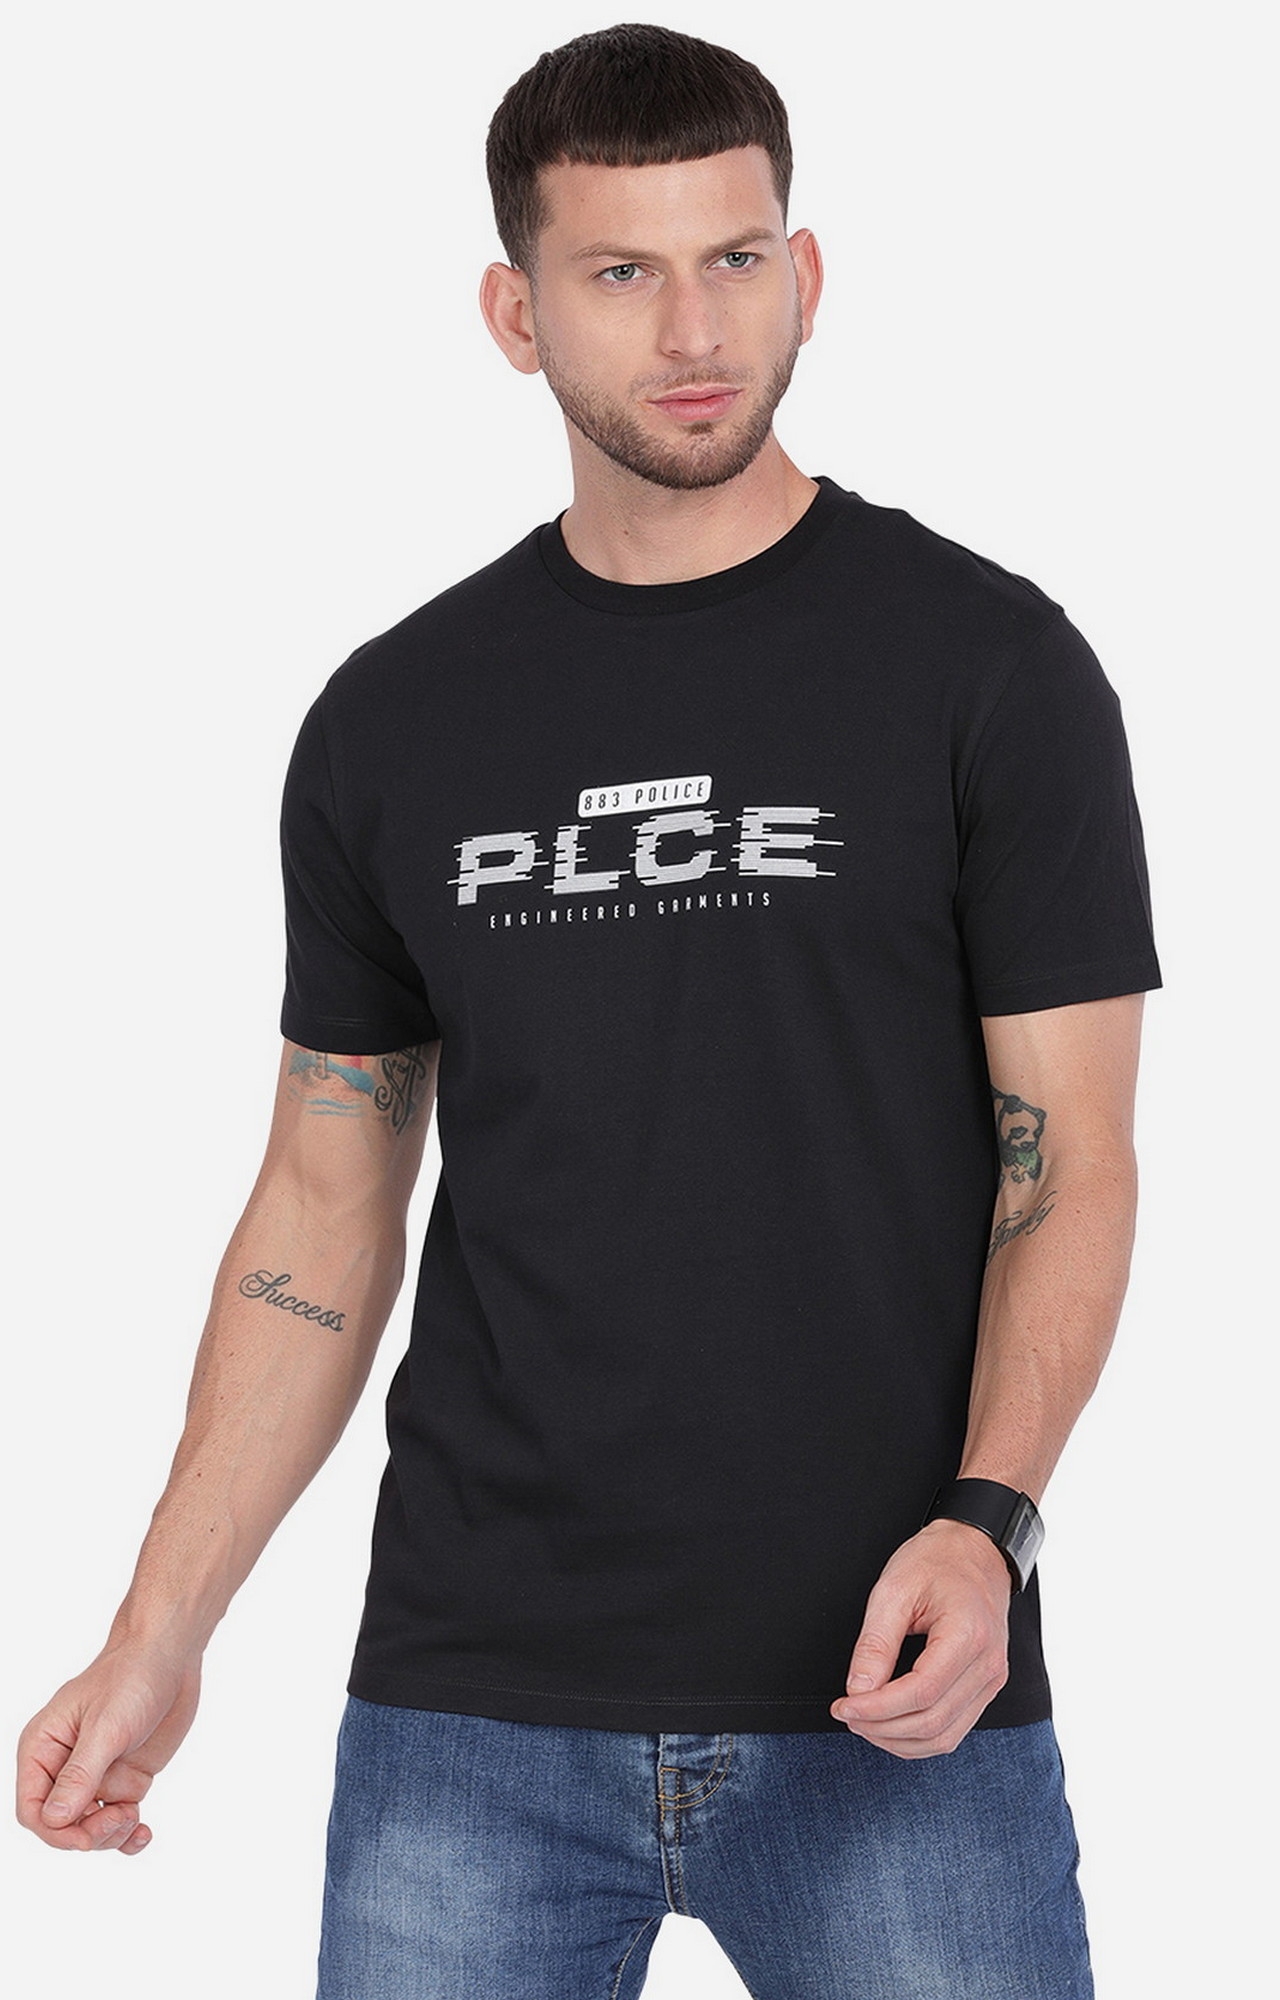 883 Police | Men's Black Cotton Typographic Printed T-Shirt 0